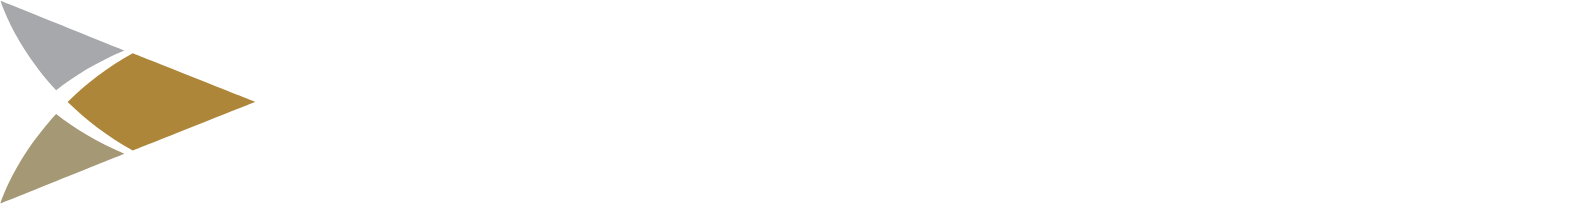 Bank of New York Mellon logo large for dark backgrounds (transparent PNG)